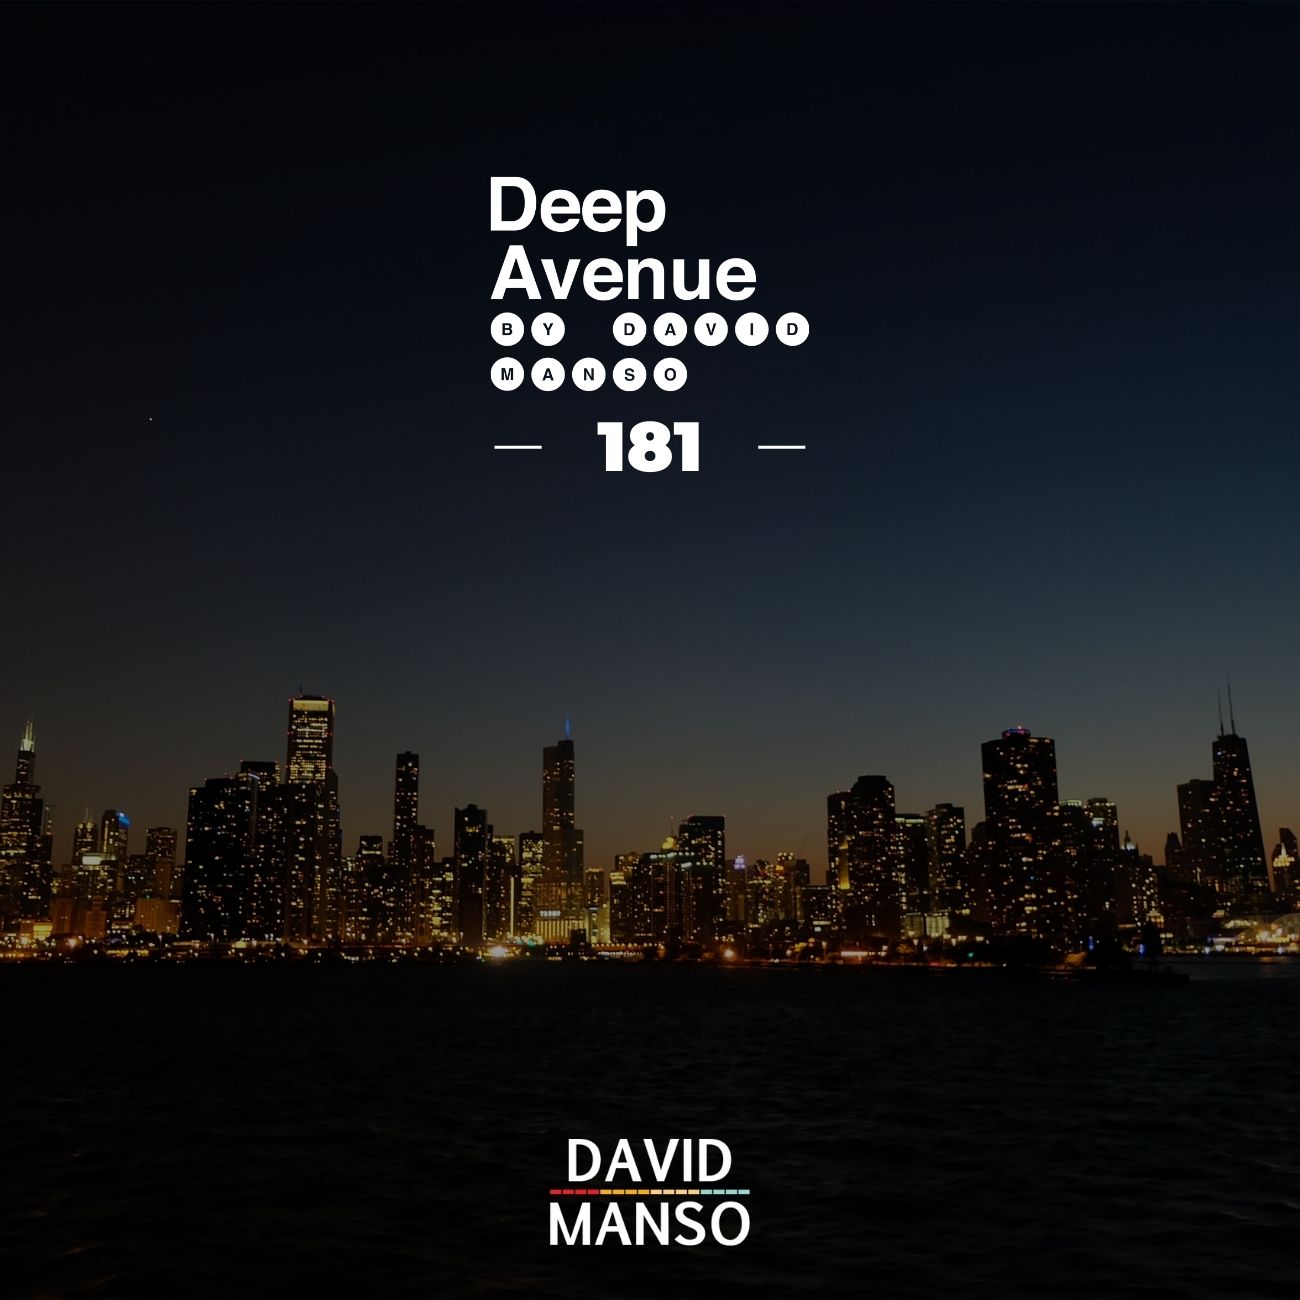 Deep Avenue 181